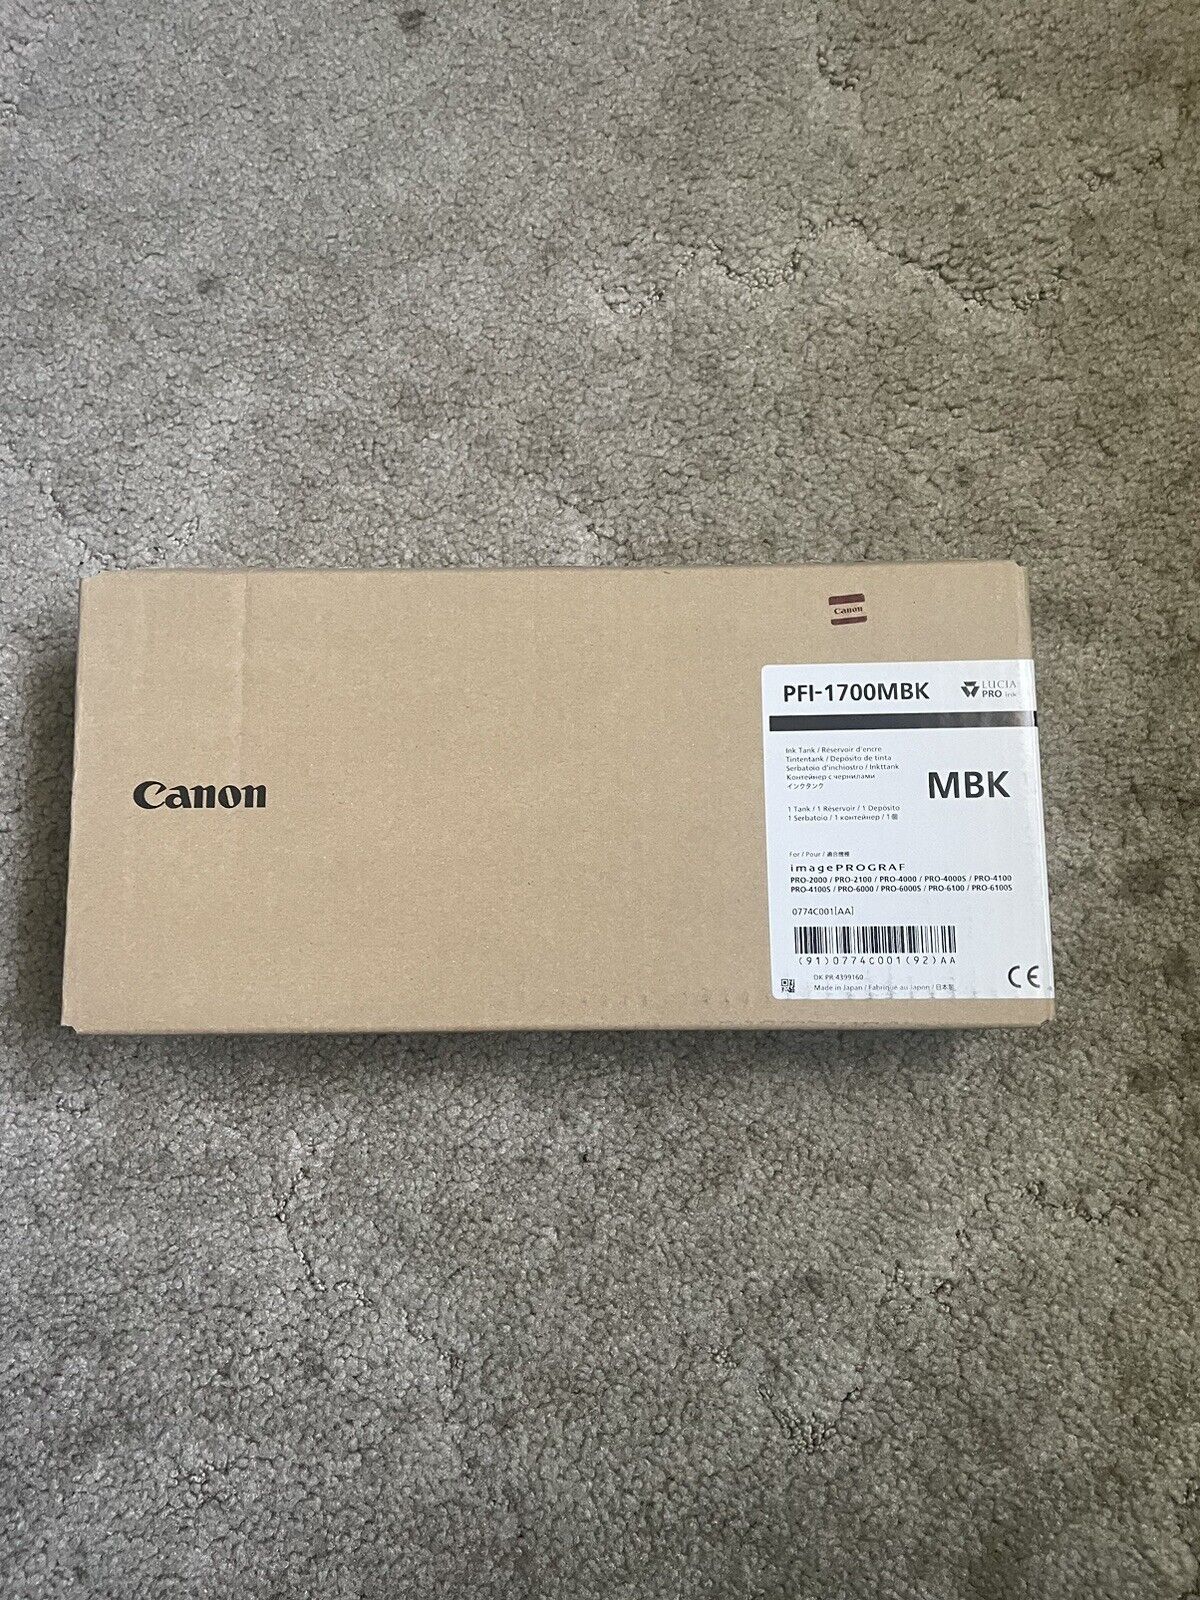 GENUINE Canon PFI-1700MBK Matte Black Ink 700ml (0774C001) For PRO Series - OEM